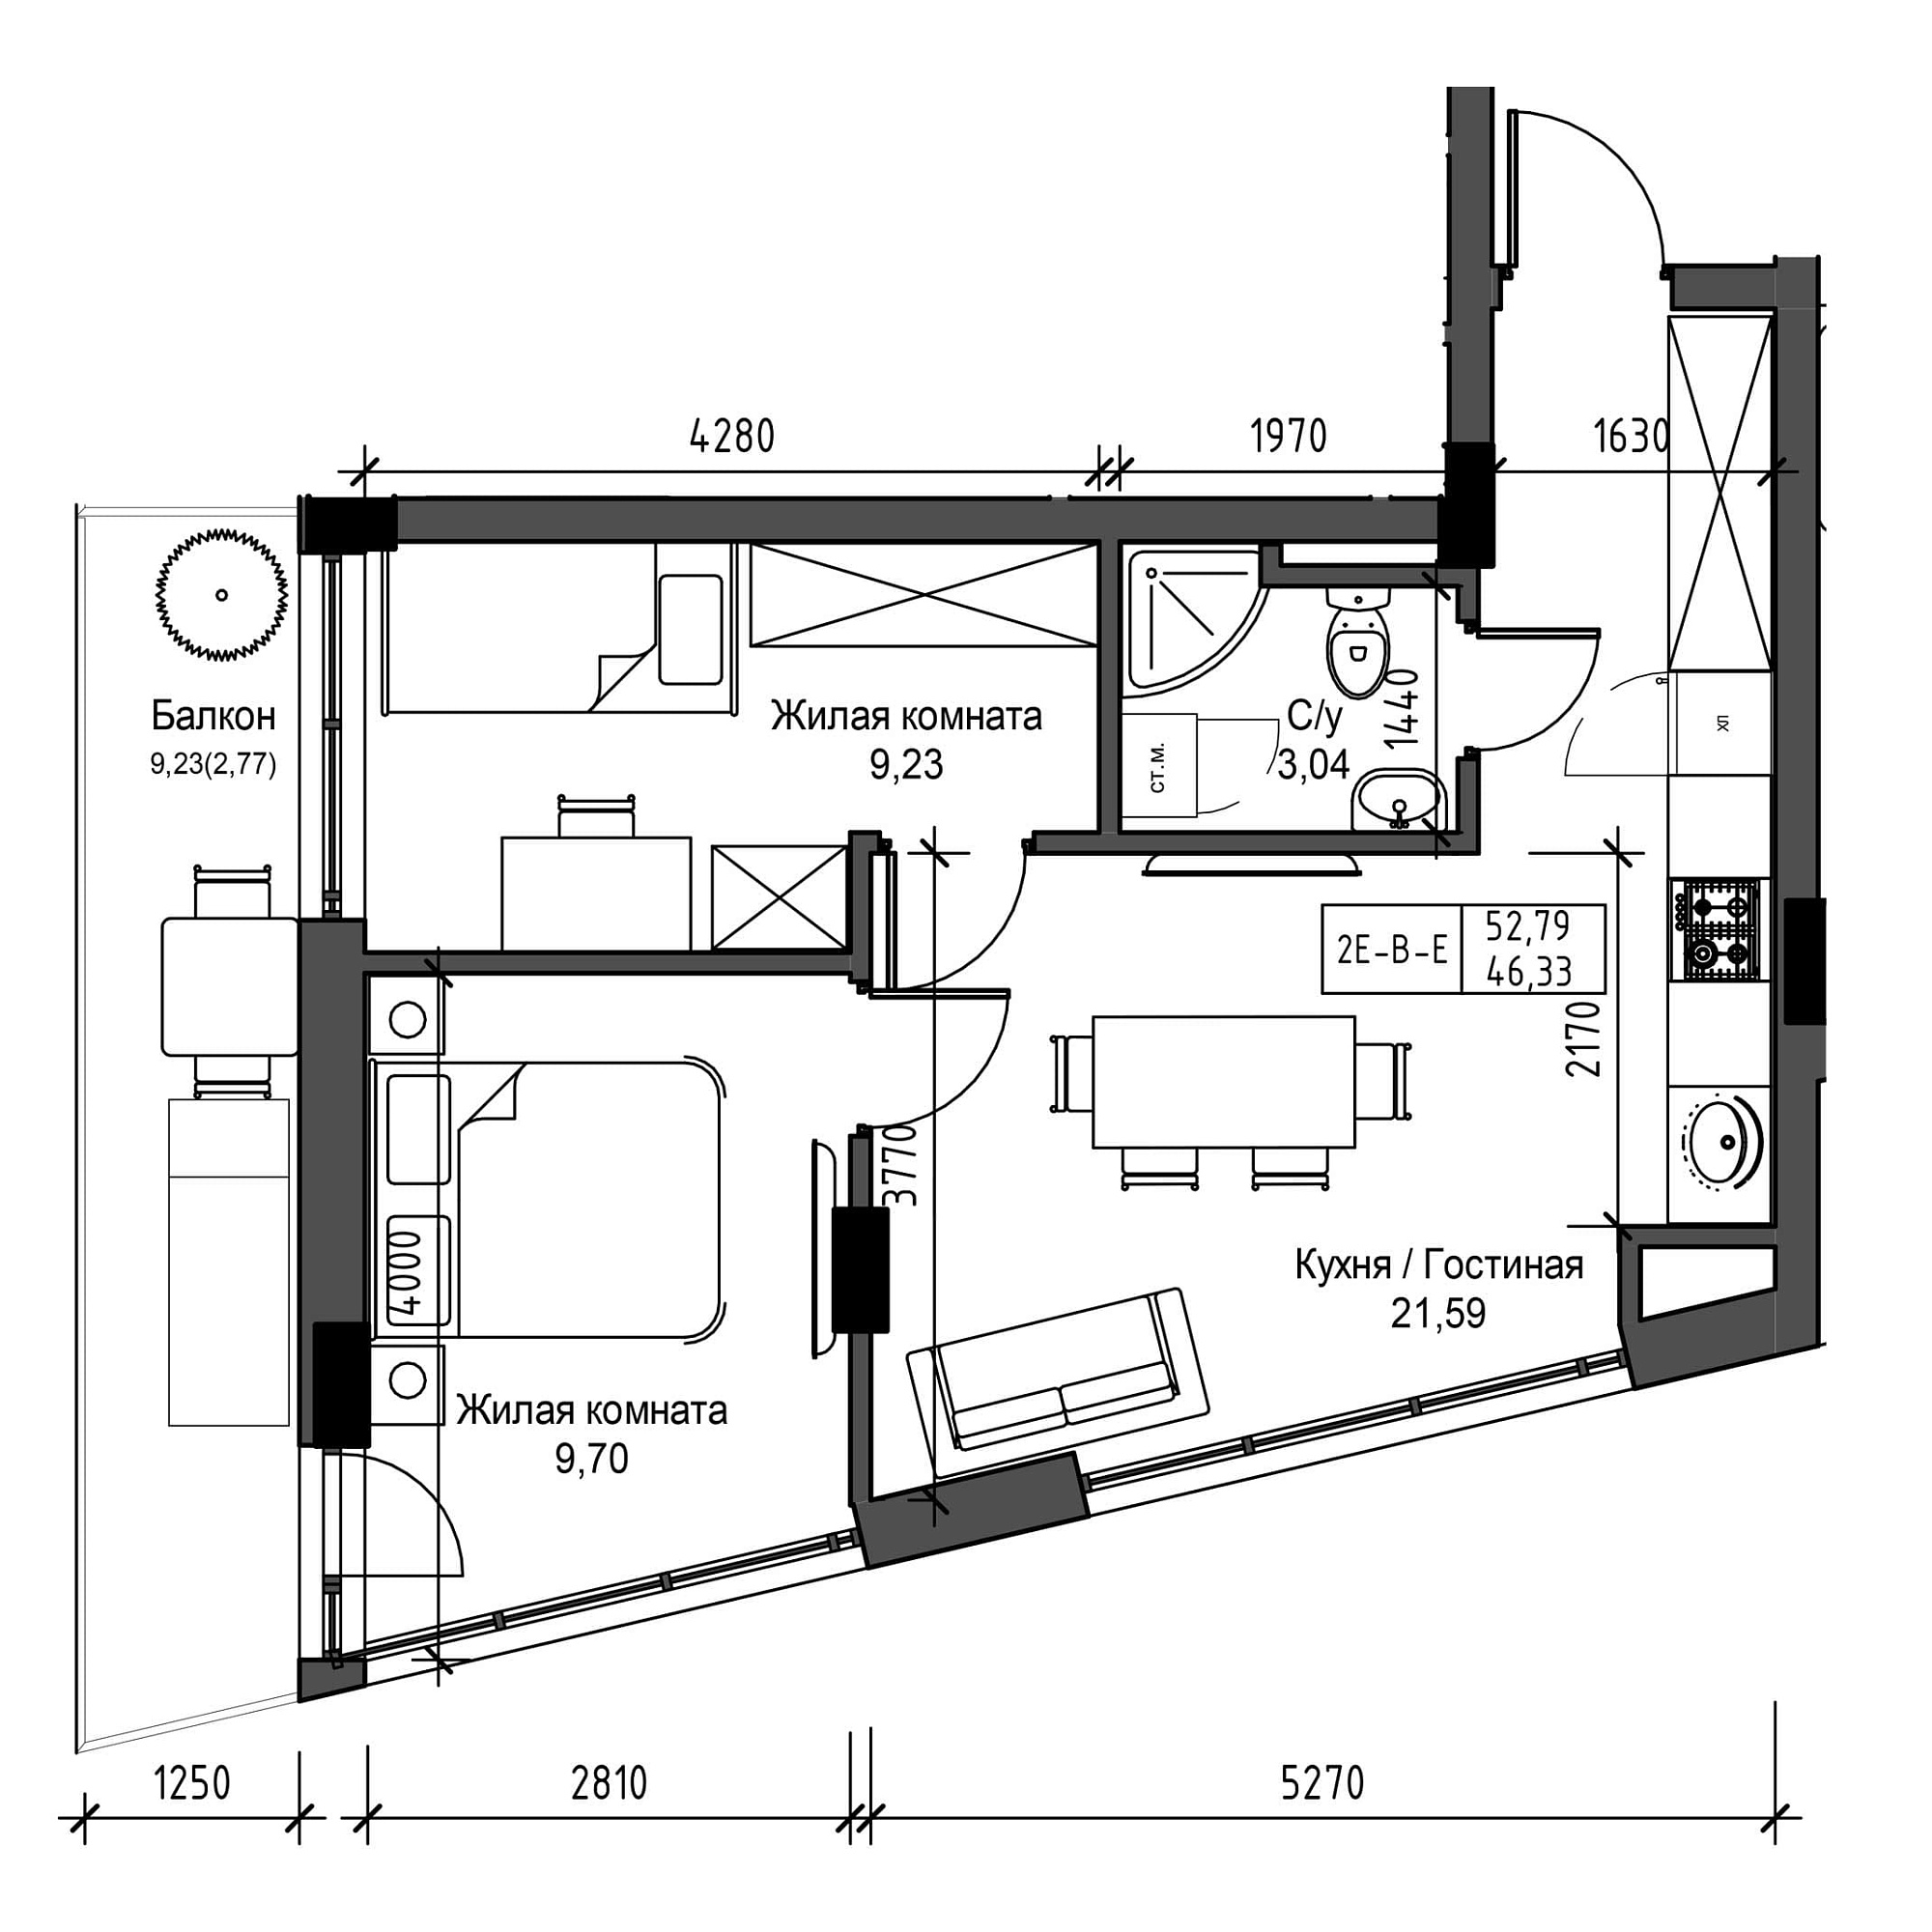 Planning 2-rm flats area 46.33m2, UM-001-06/0009.